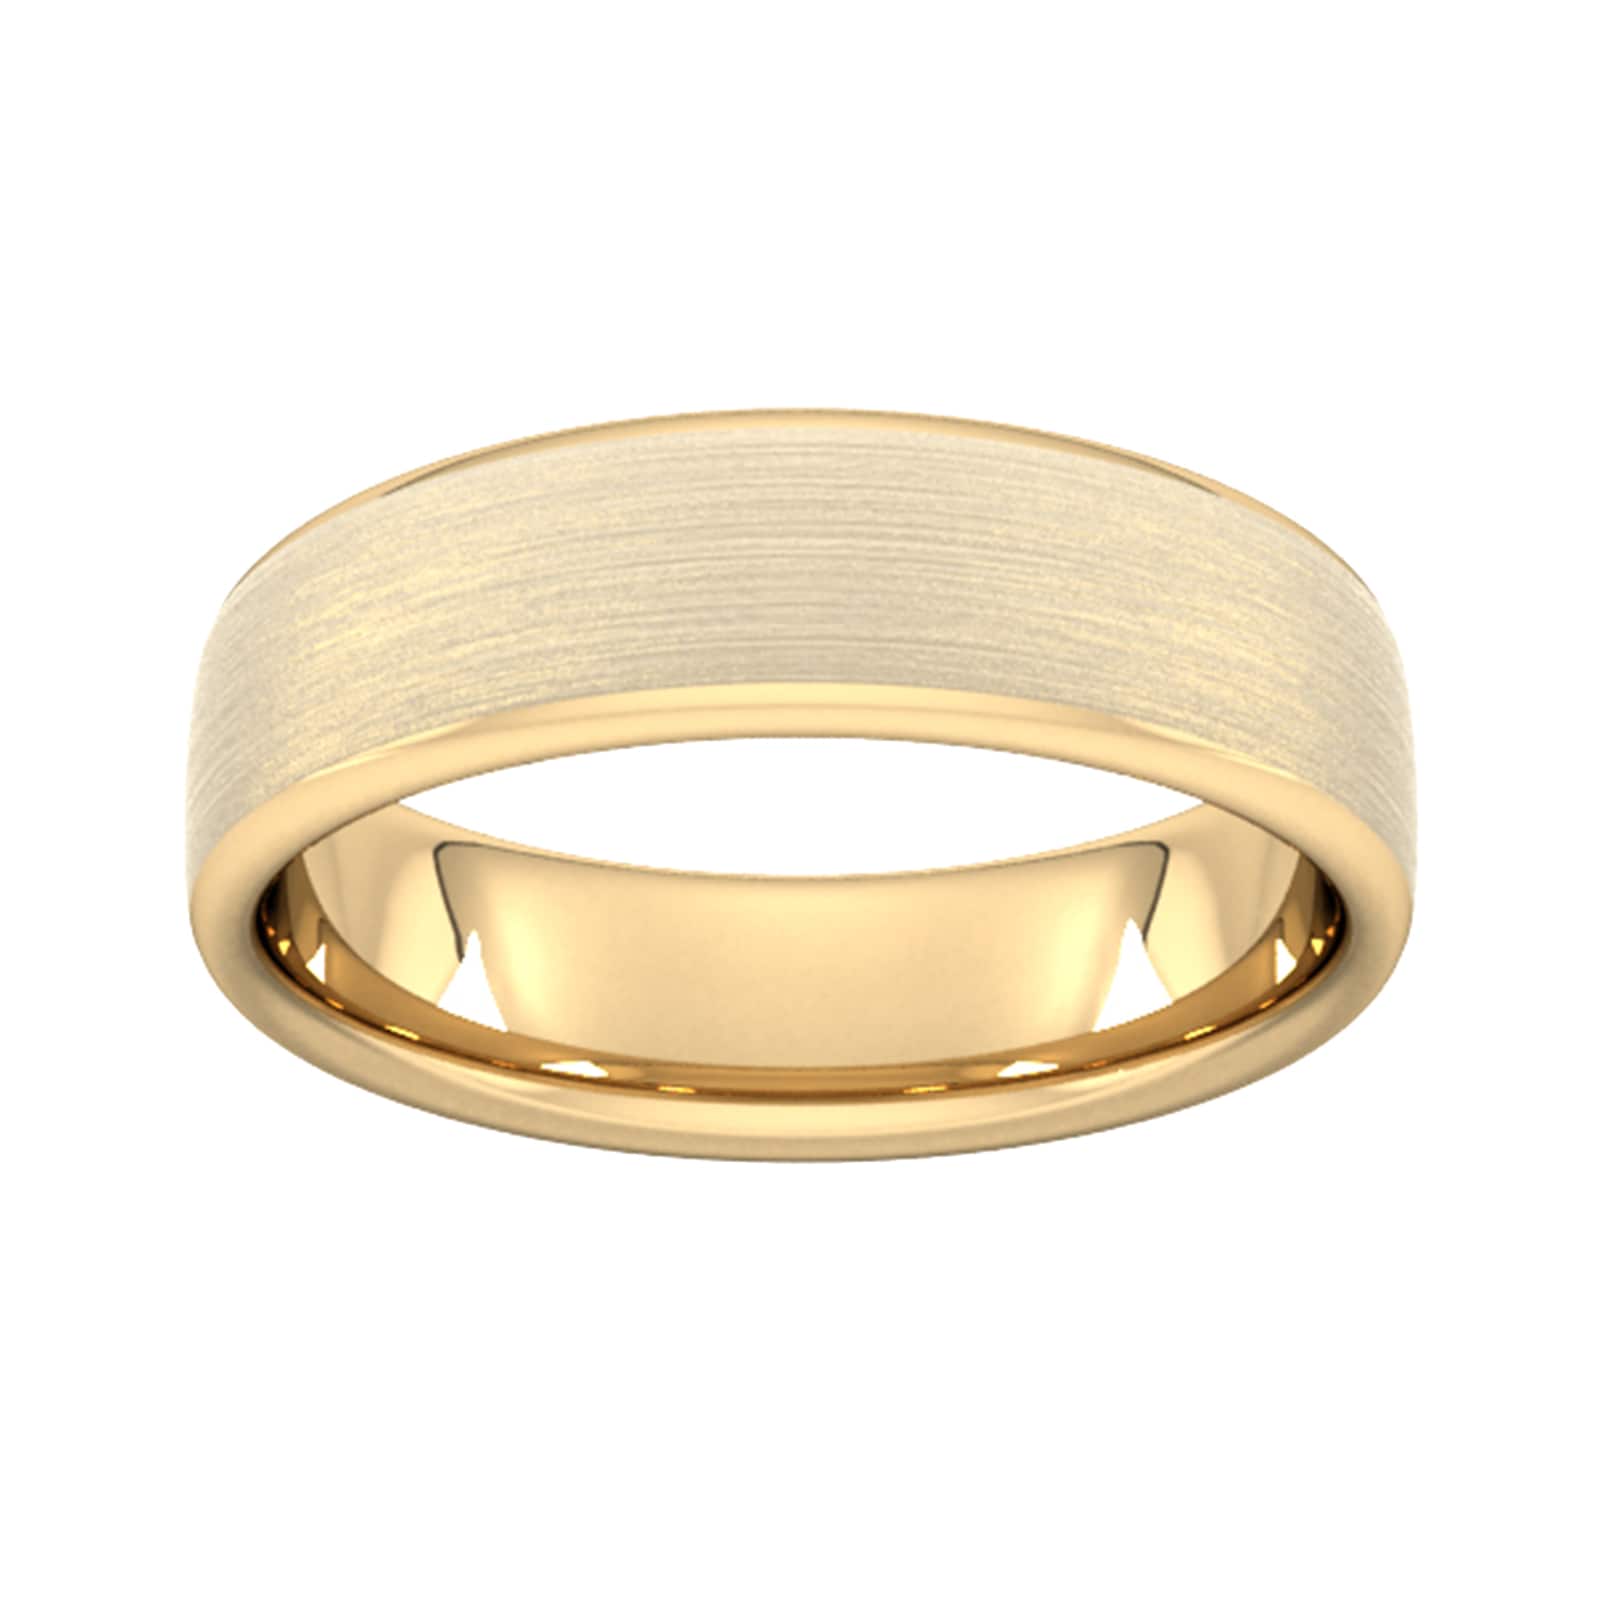 6mm Slight Court Standard Matt Finished Wedding Ring In 9 Carat Yellow Gold - Ring Size I